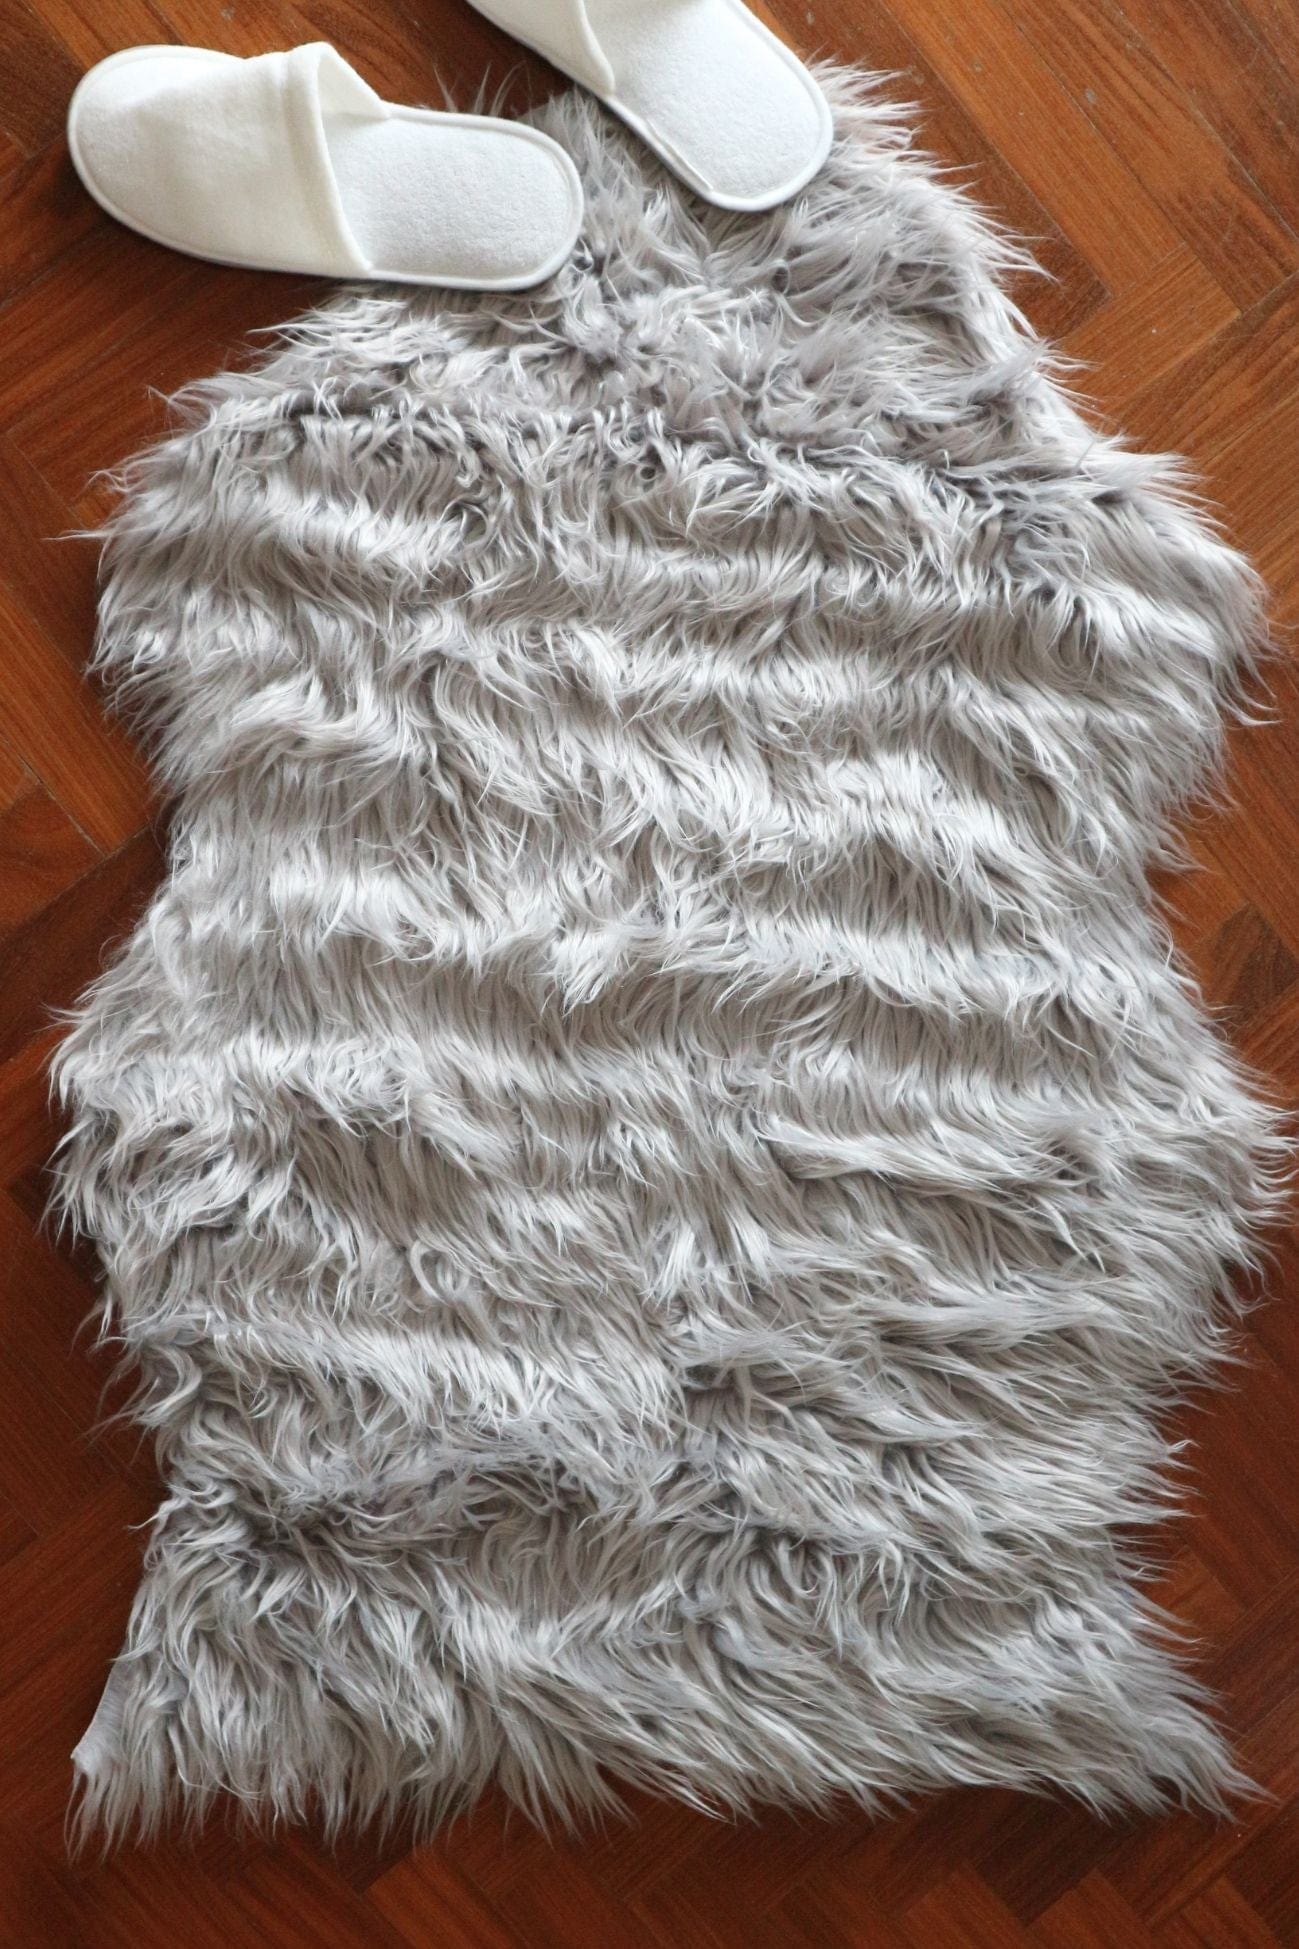 Item International Hara Hara - Tappetino grigio a pelo lungo 60x90cm | Item International